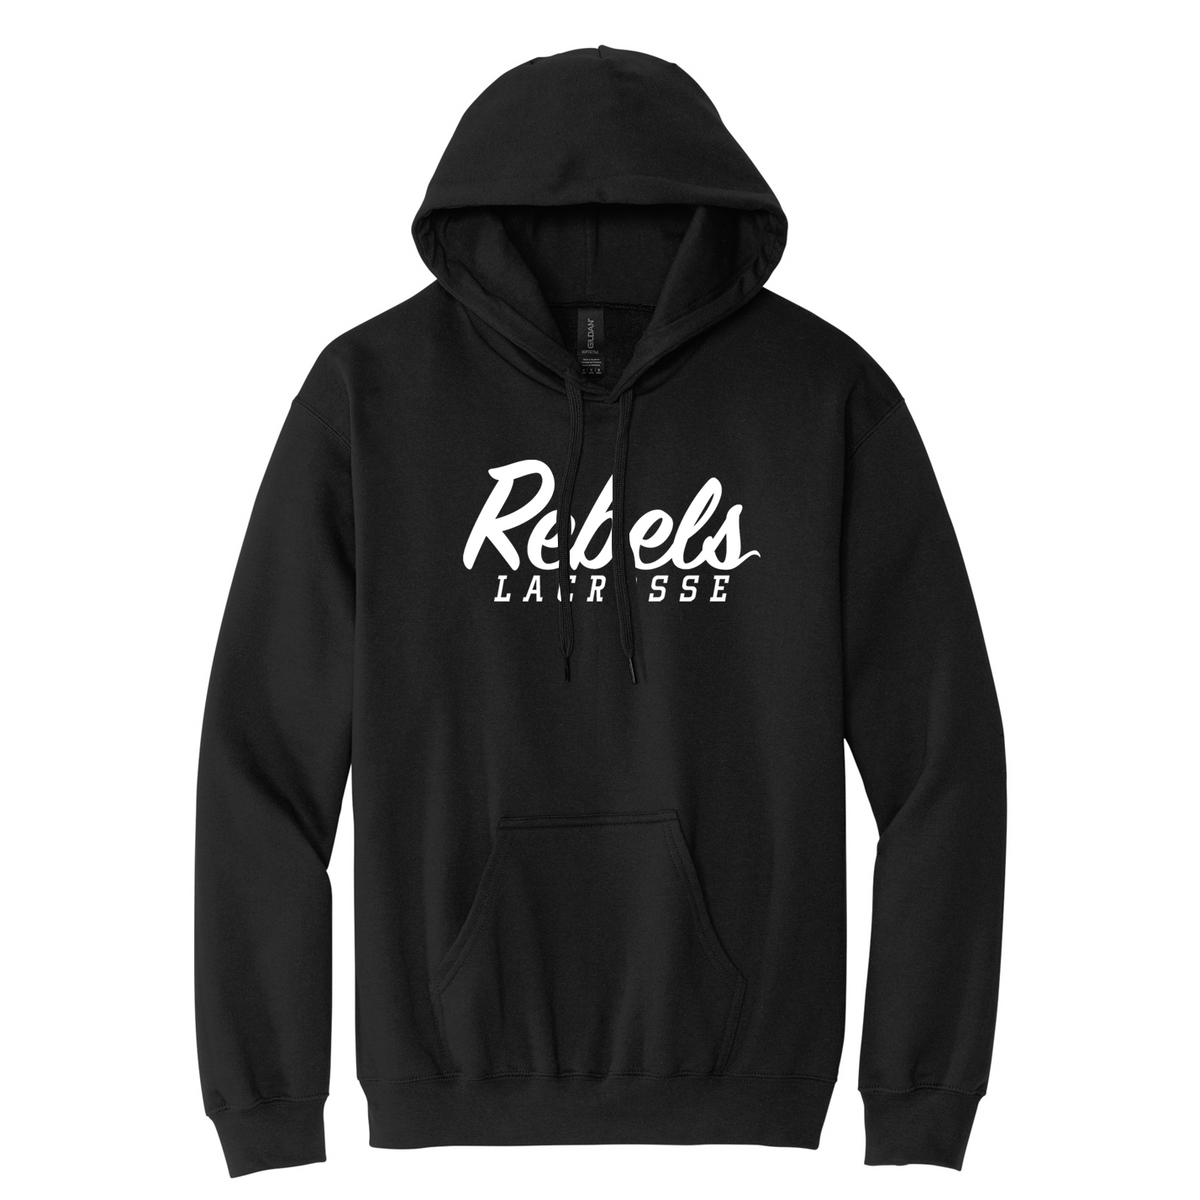 Rebels Lacrosse Soft Style Sweatshirt